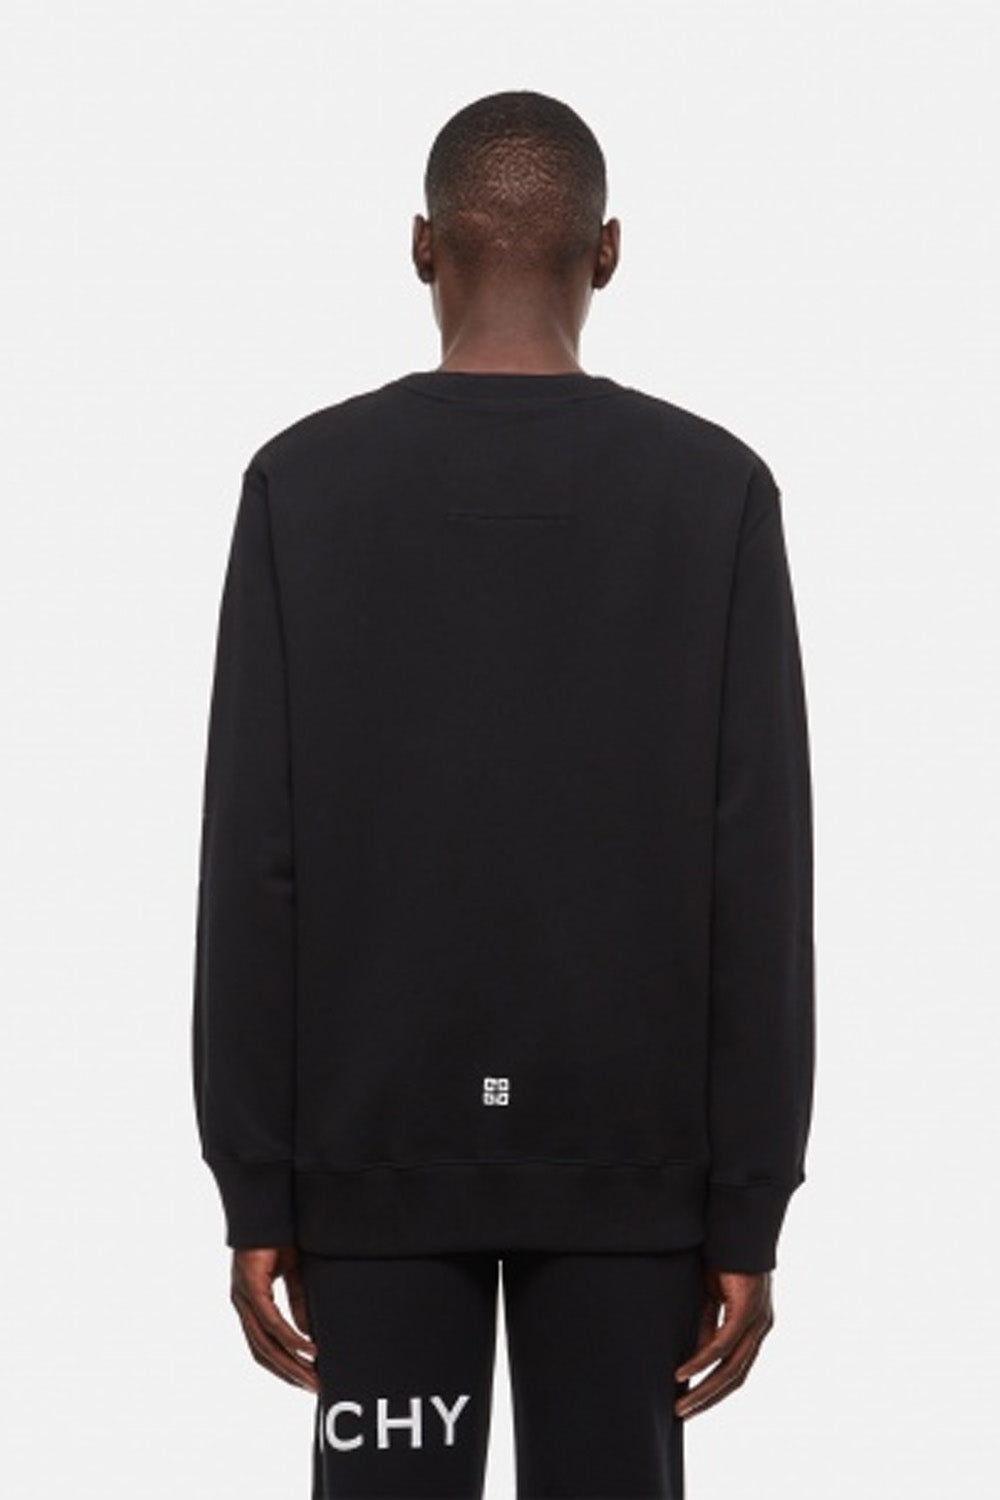 Givenchy logo sweatshirt black